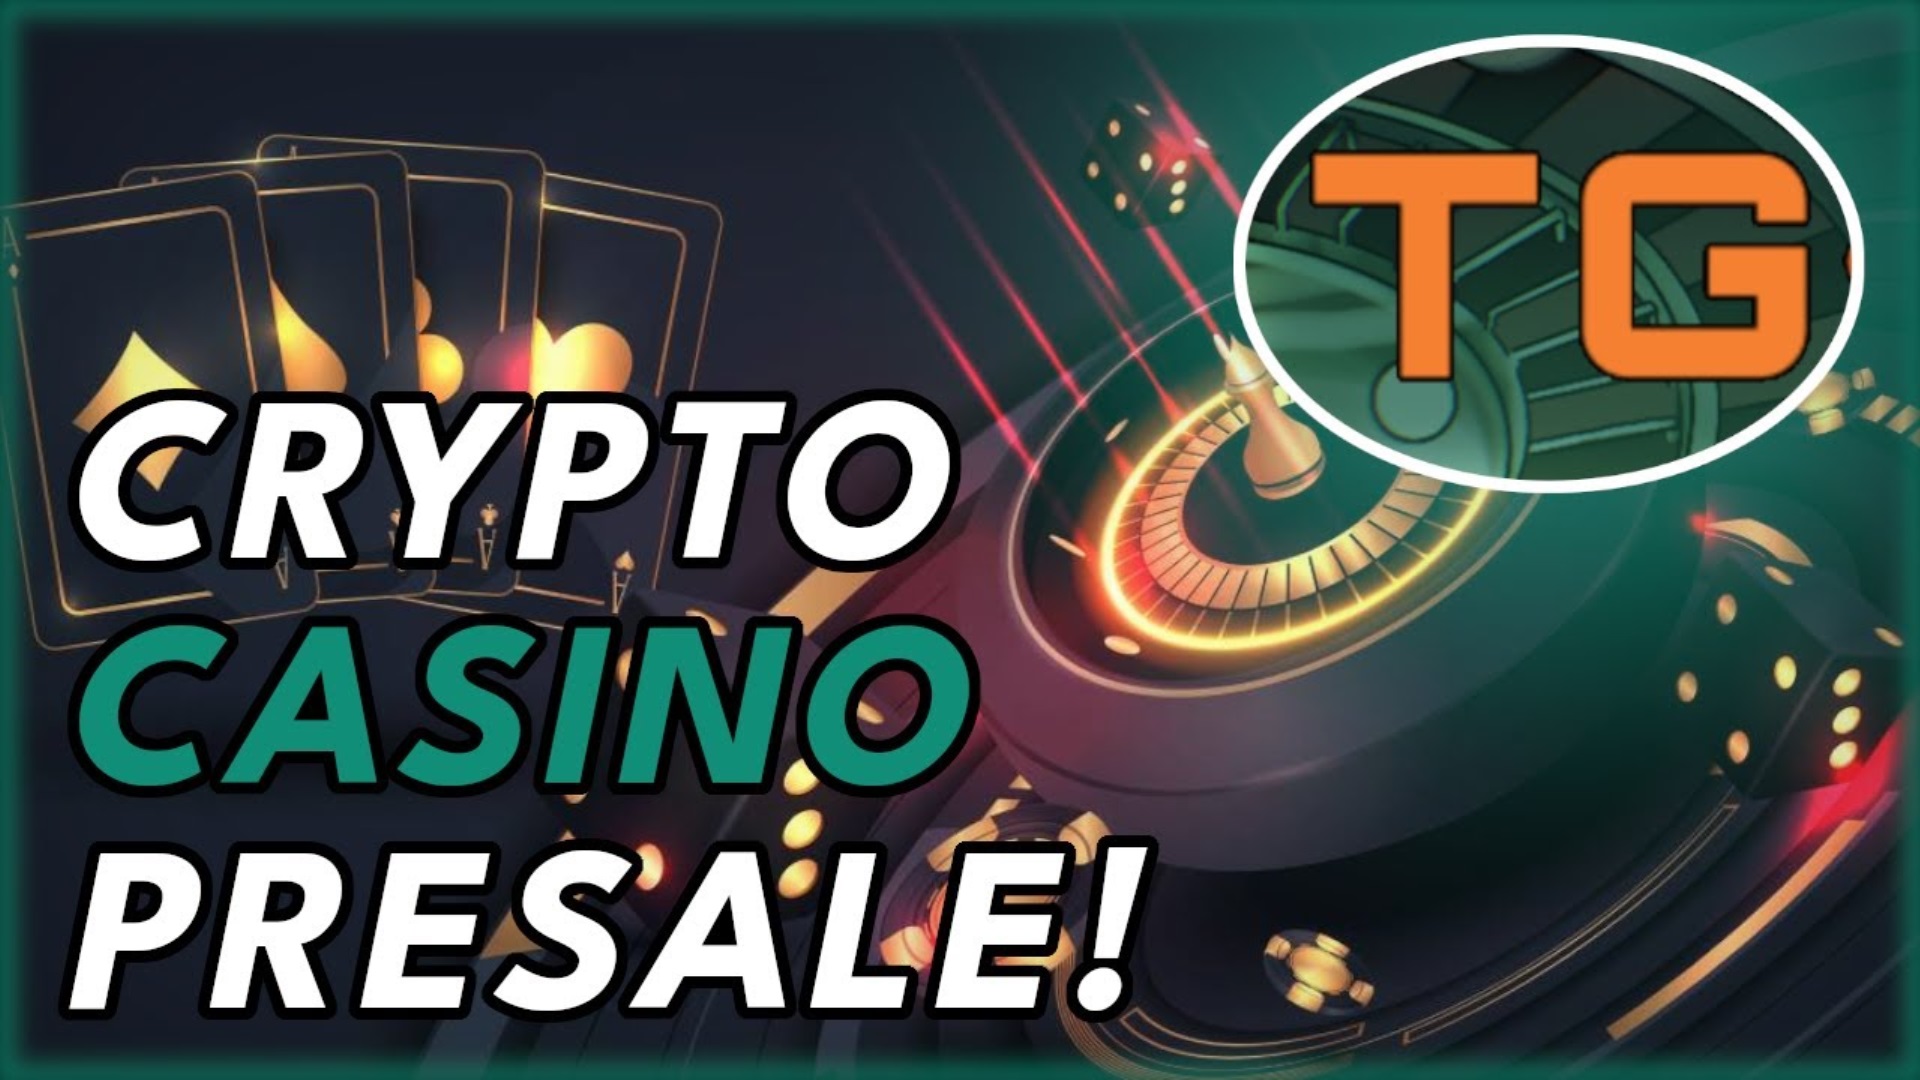 Cilinix Crypto Reviews World No. 1 Telegram Casino’s Presale – Could It Be The Next Big Crypto Trend?